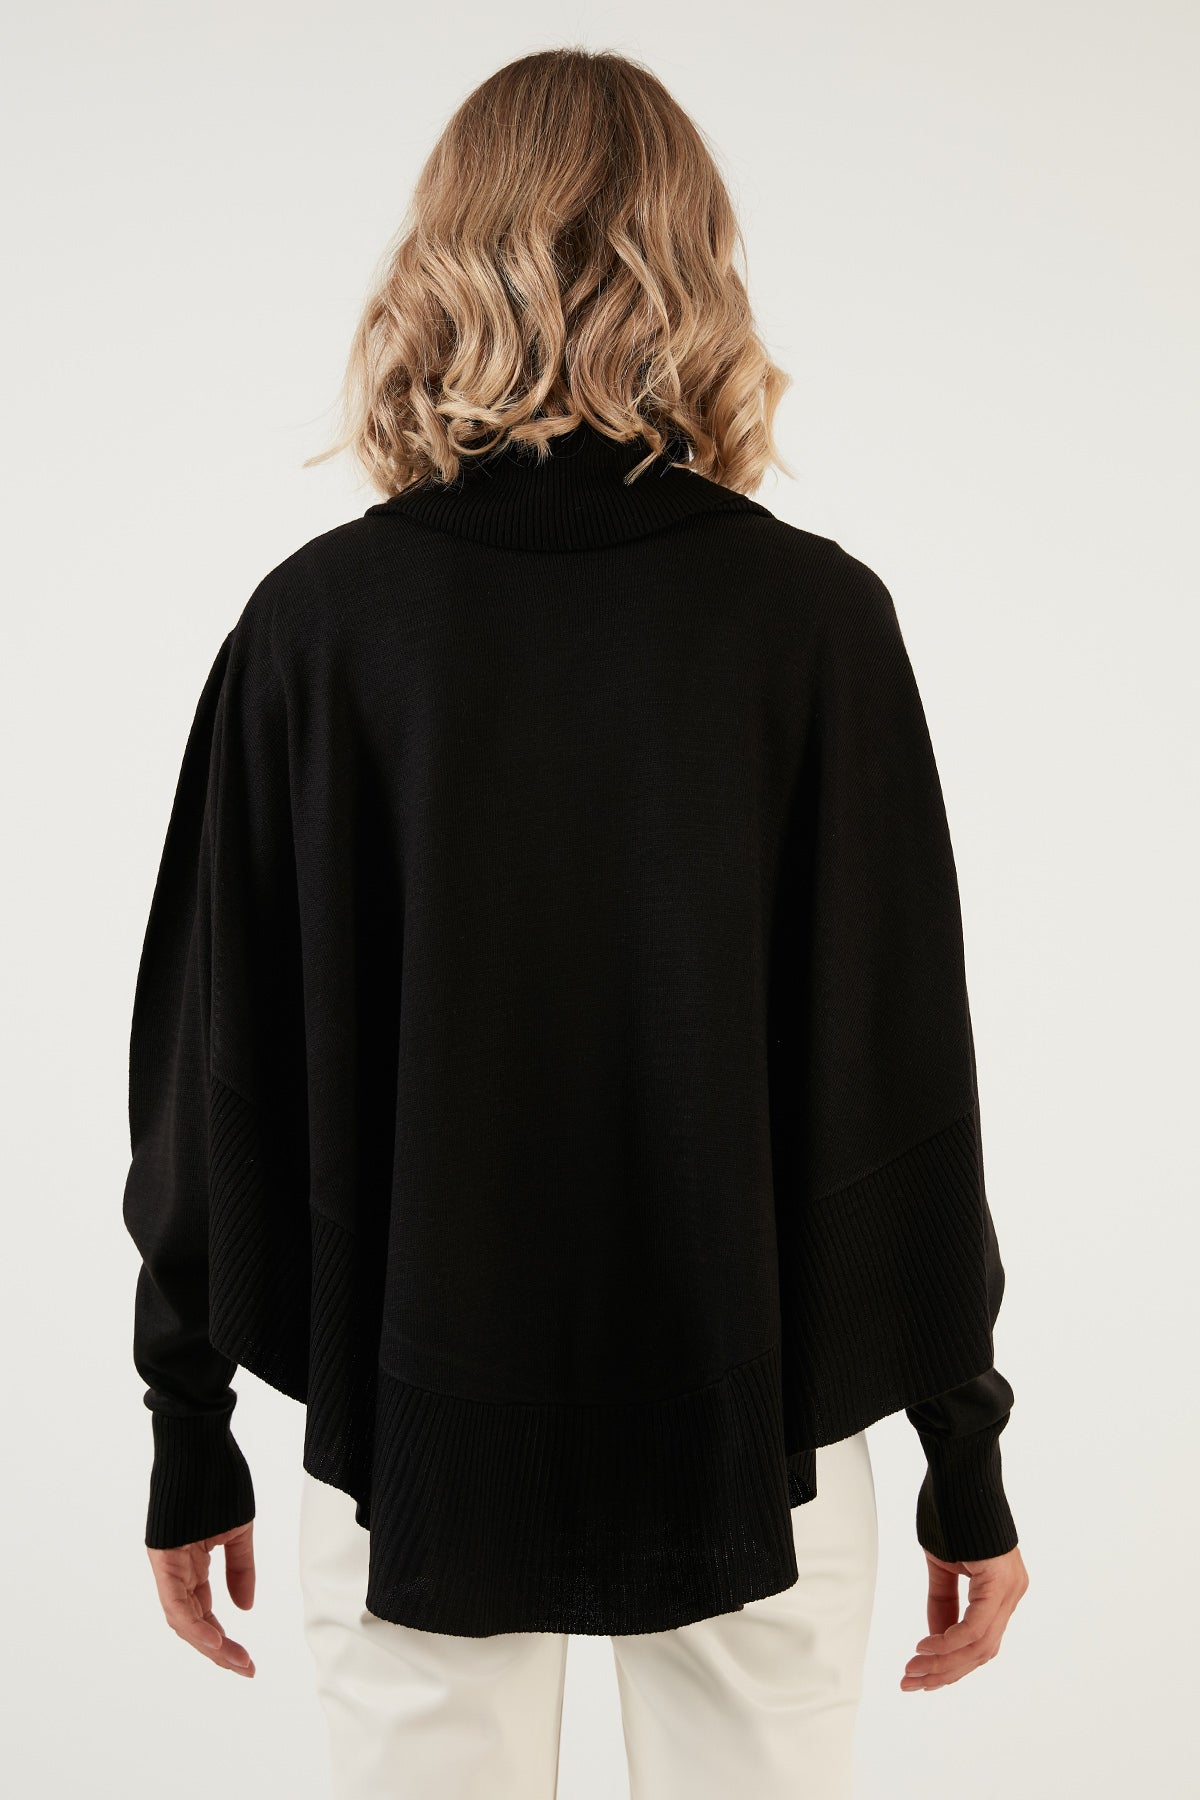 Lela Turtleneck Bat Sleeve Women Sweater - BLACK